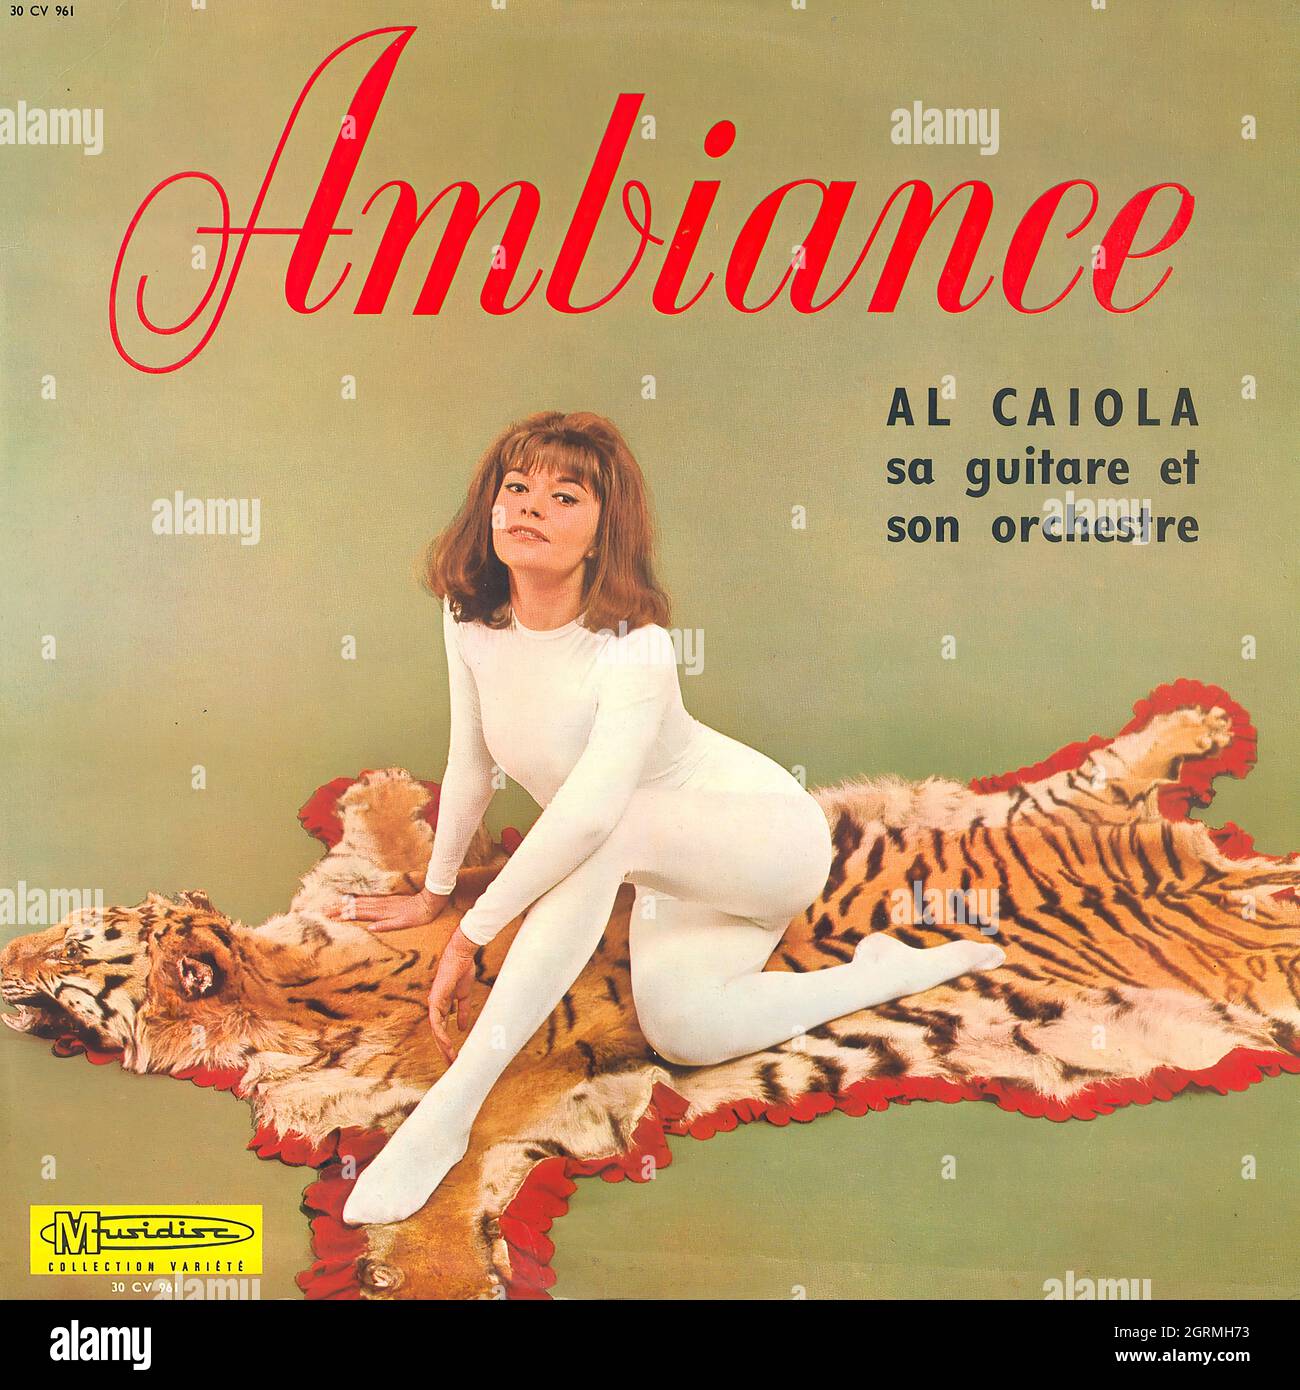 Al Caiola, sa Guitare et son Orchestre - Ambiance - Vintage Vinyl Record Cover Stock Photo